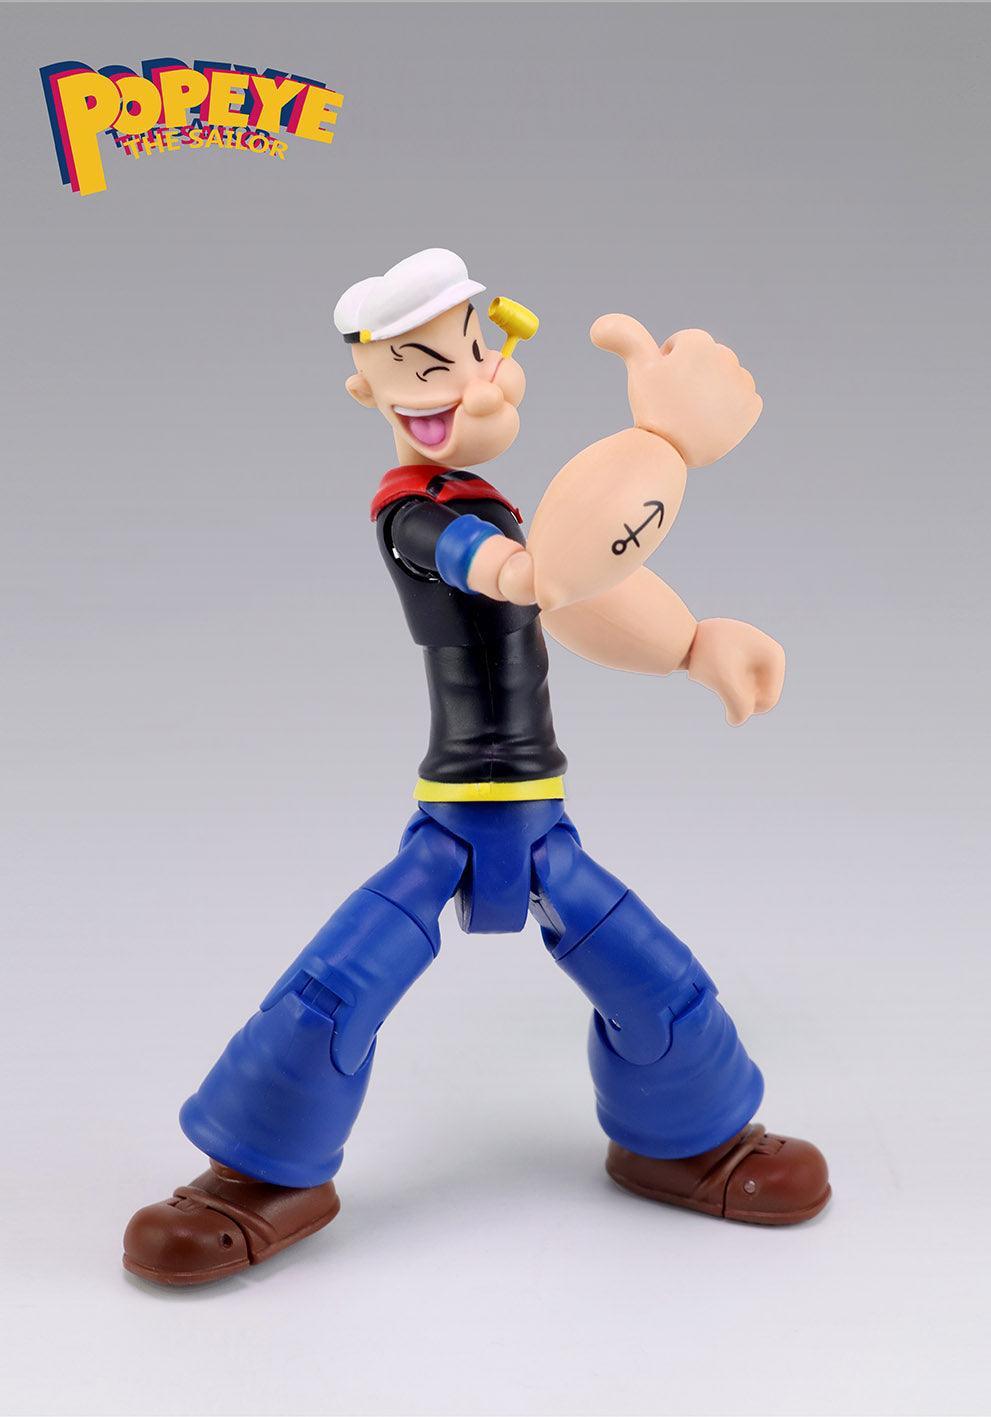 Dasin - 1:12 Popeye the Sailor Action Figure